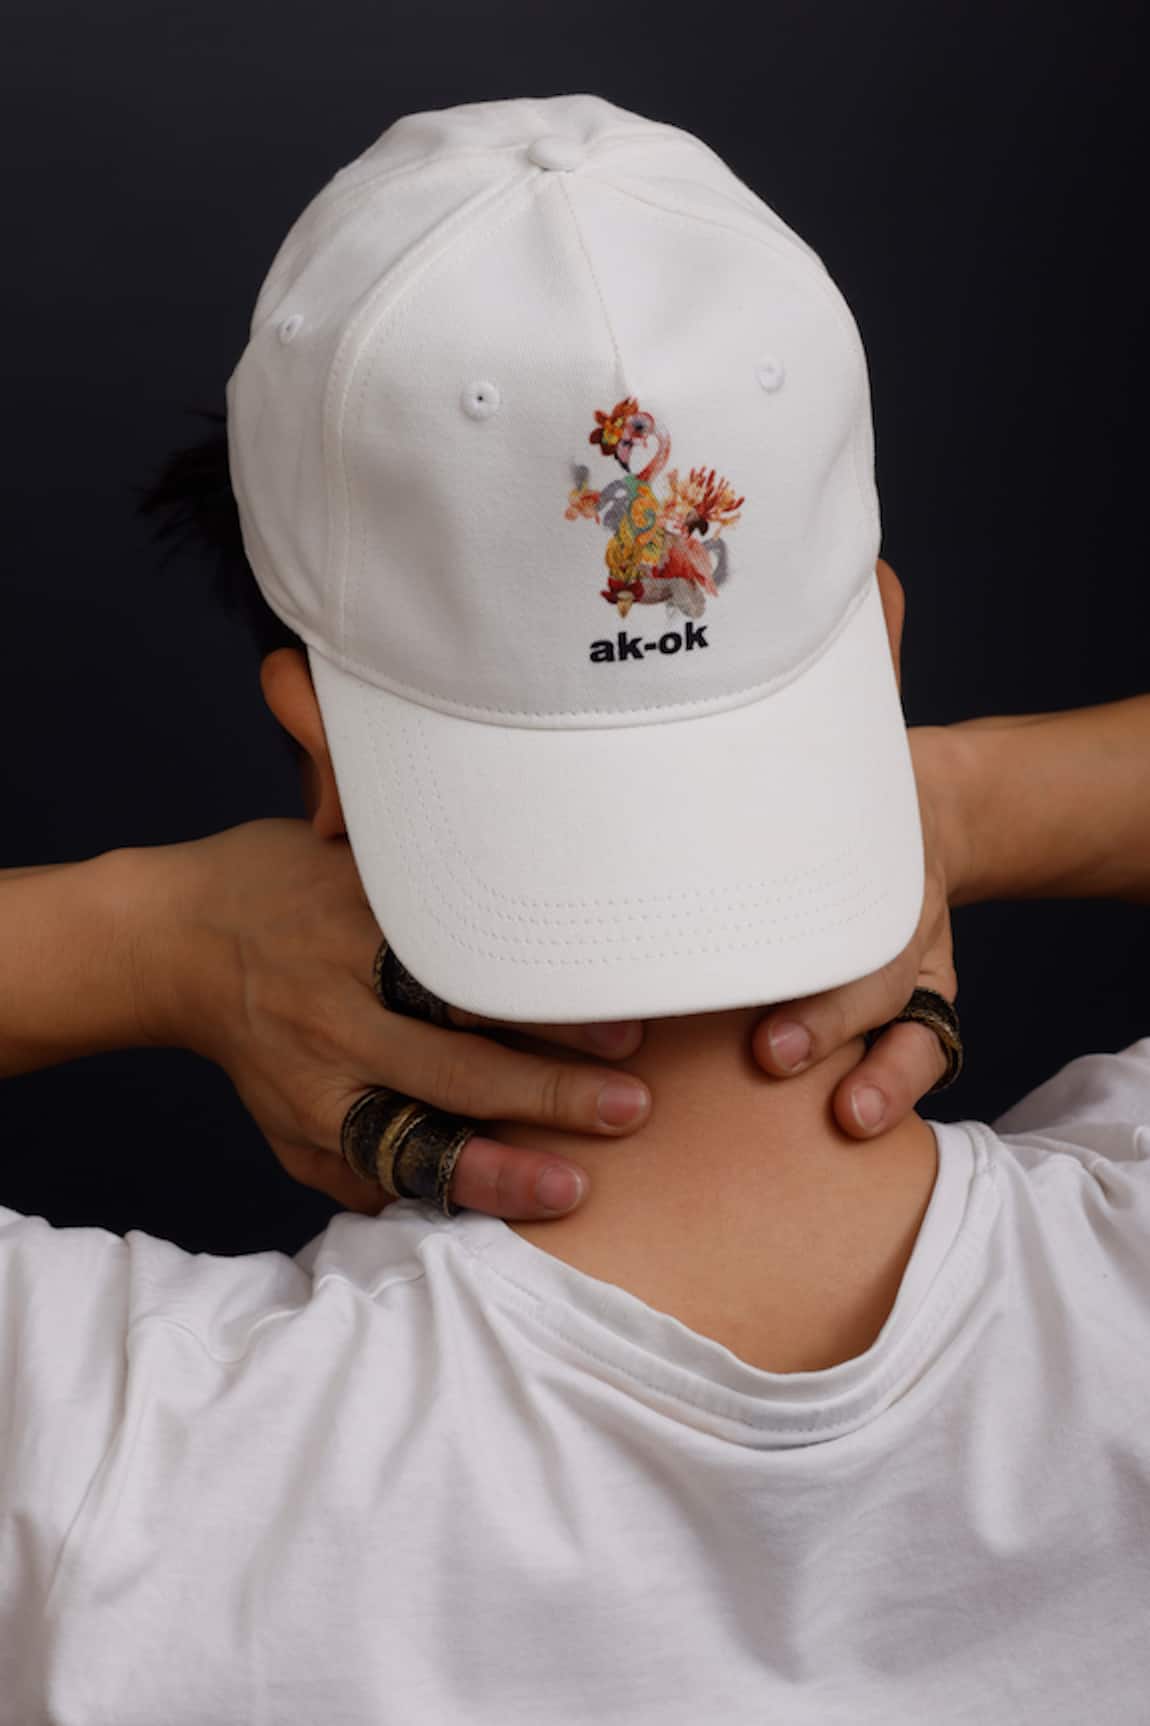 AK-OK Animal Print Baseball Cap